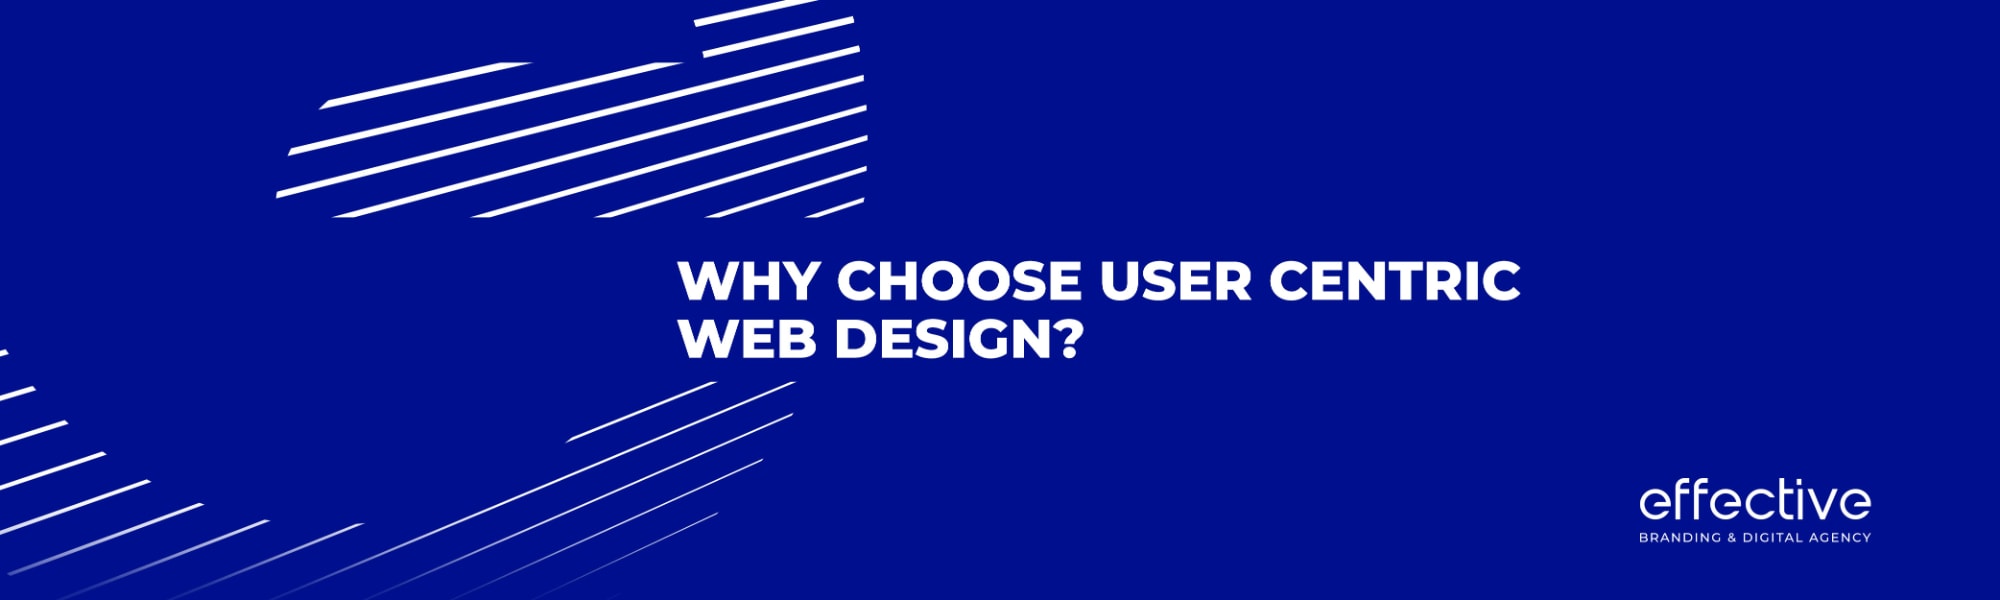 Why Choose User Centric Web Design